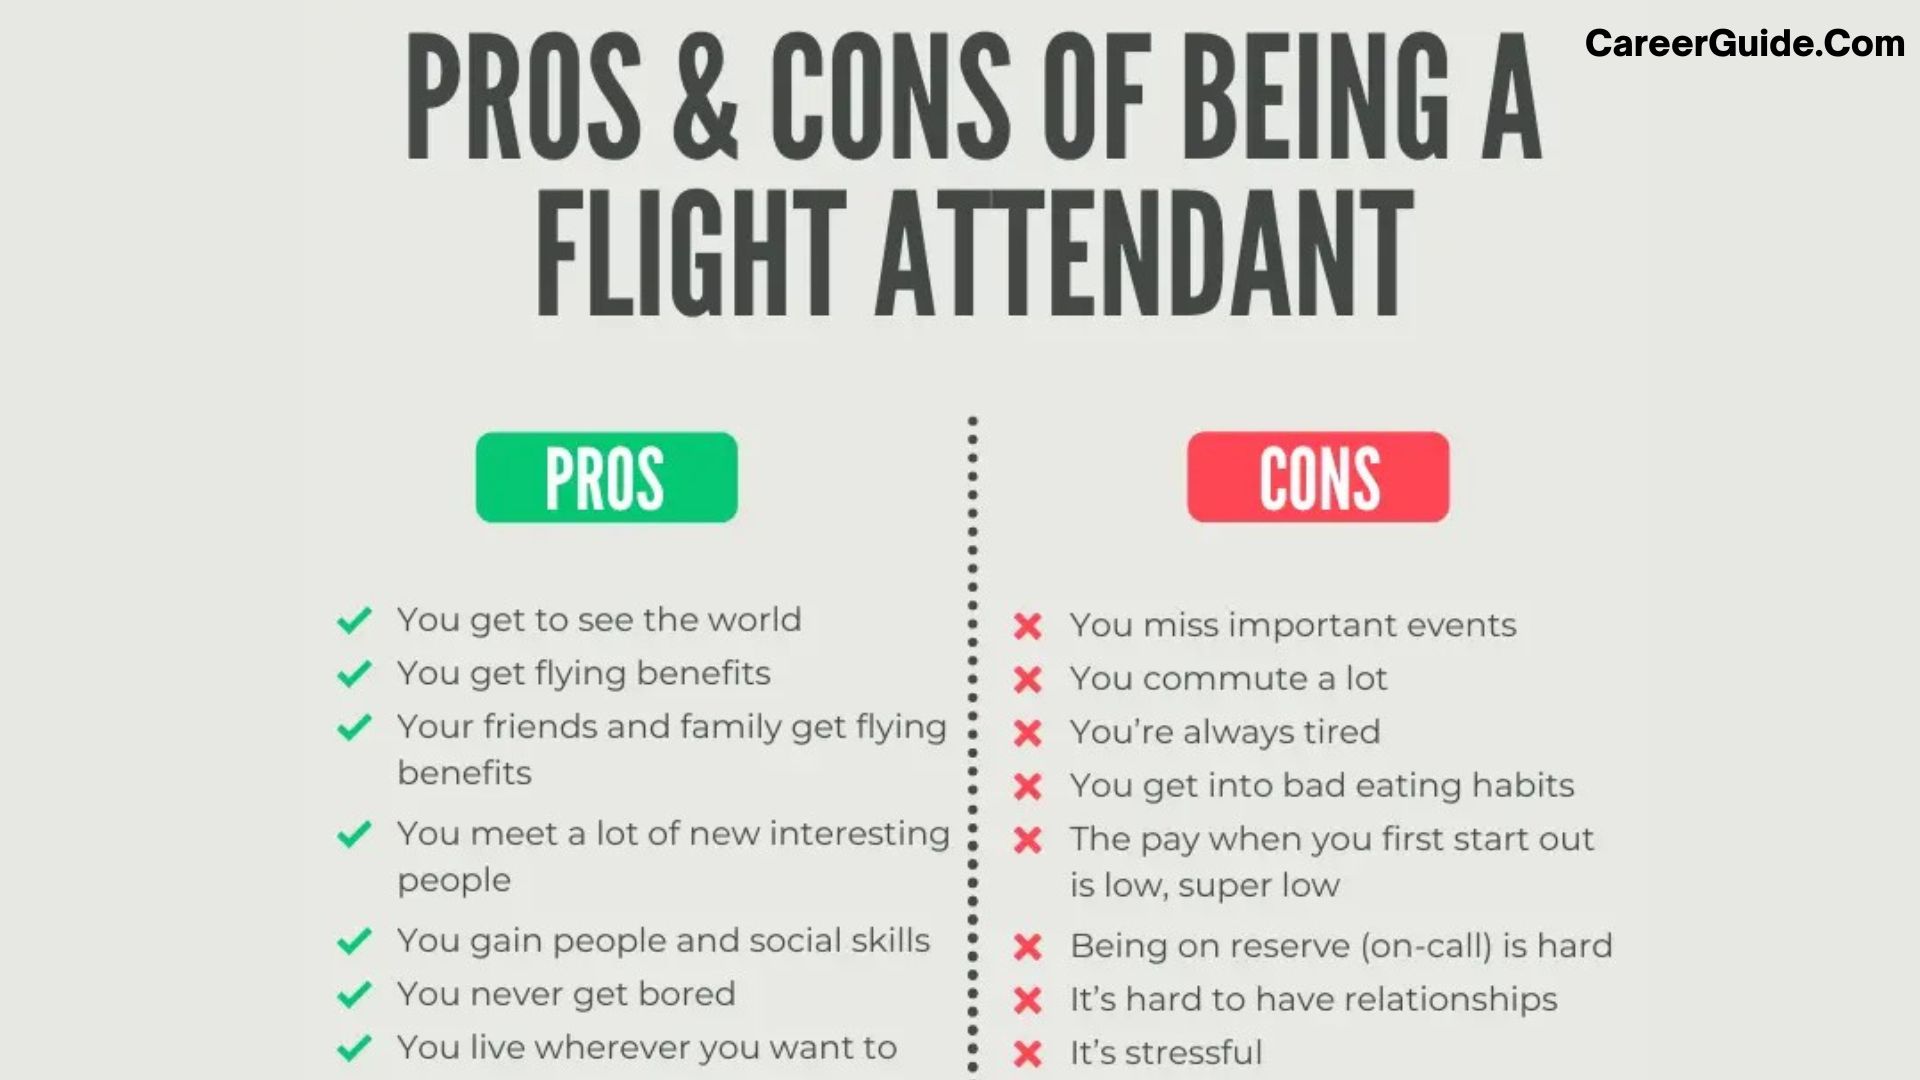 Benefits of Being a flight attendant